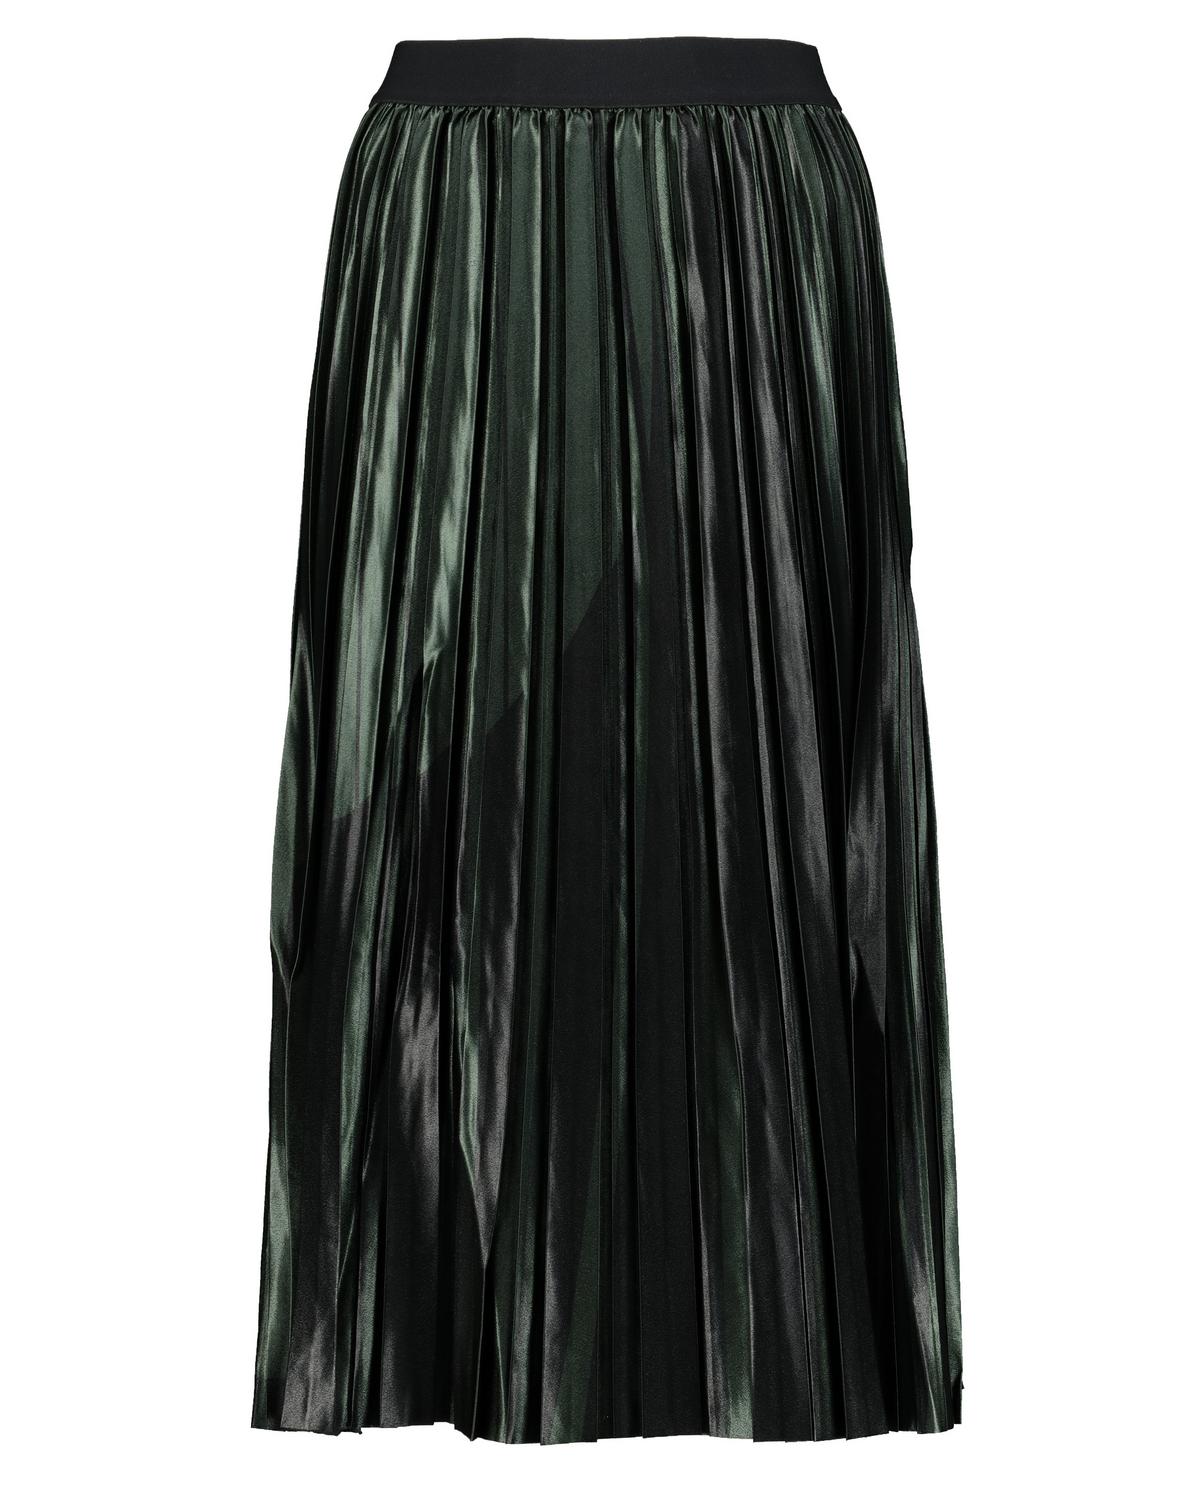 Poetry Helena Satin Pleated Skirt -  Dark Green/Dark Olive